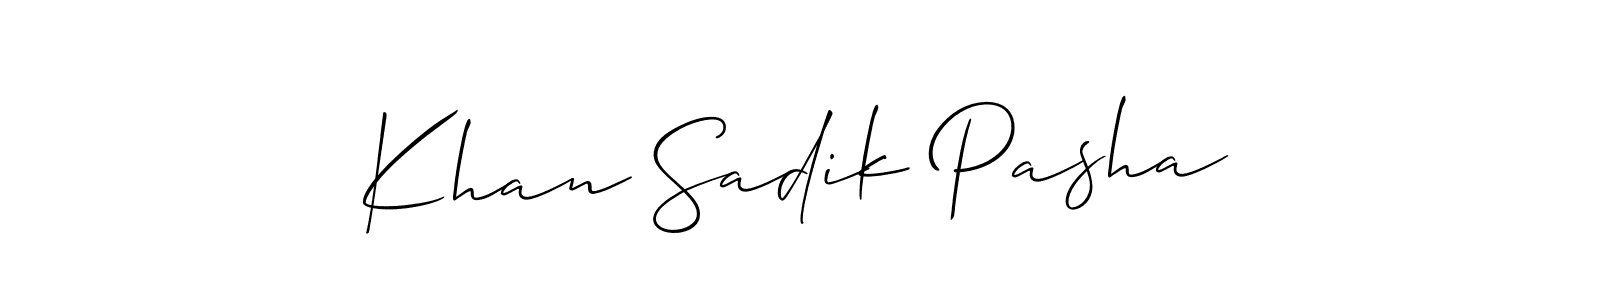 How to make Khan Sadik Pasha signature? Allison_Script is a professional autograph style. Create handwritten signature for Khan Sadik Pasha name. Khan Sadik Pasha signature style 2 images and pictures png